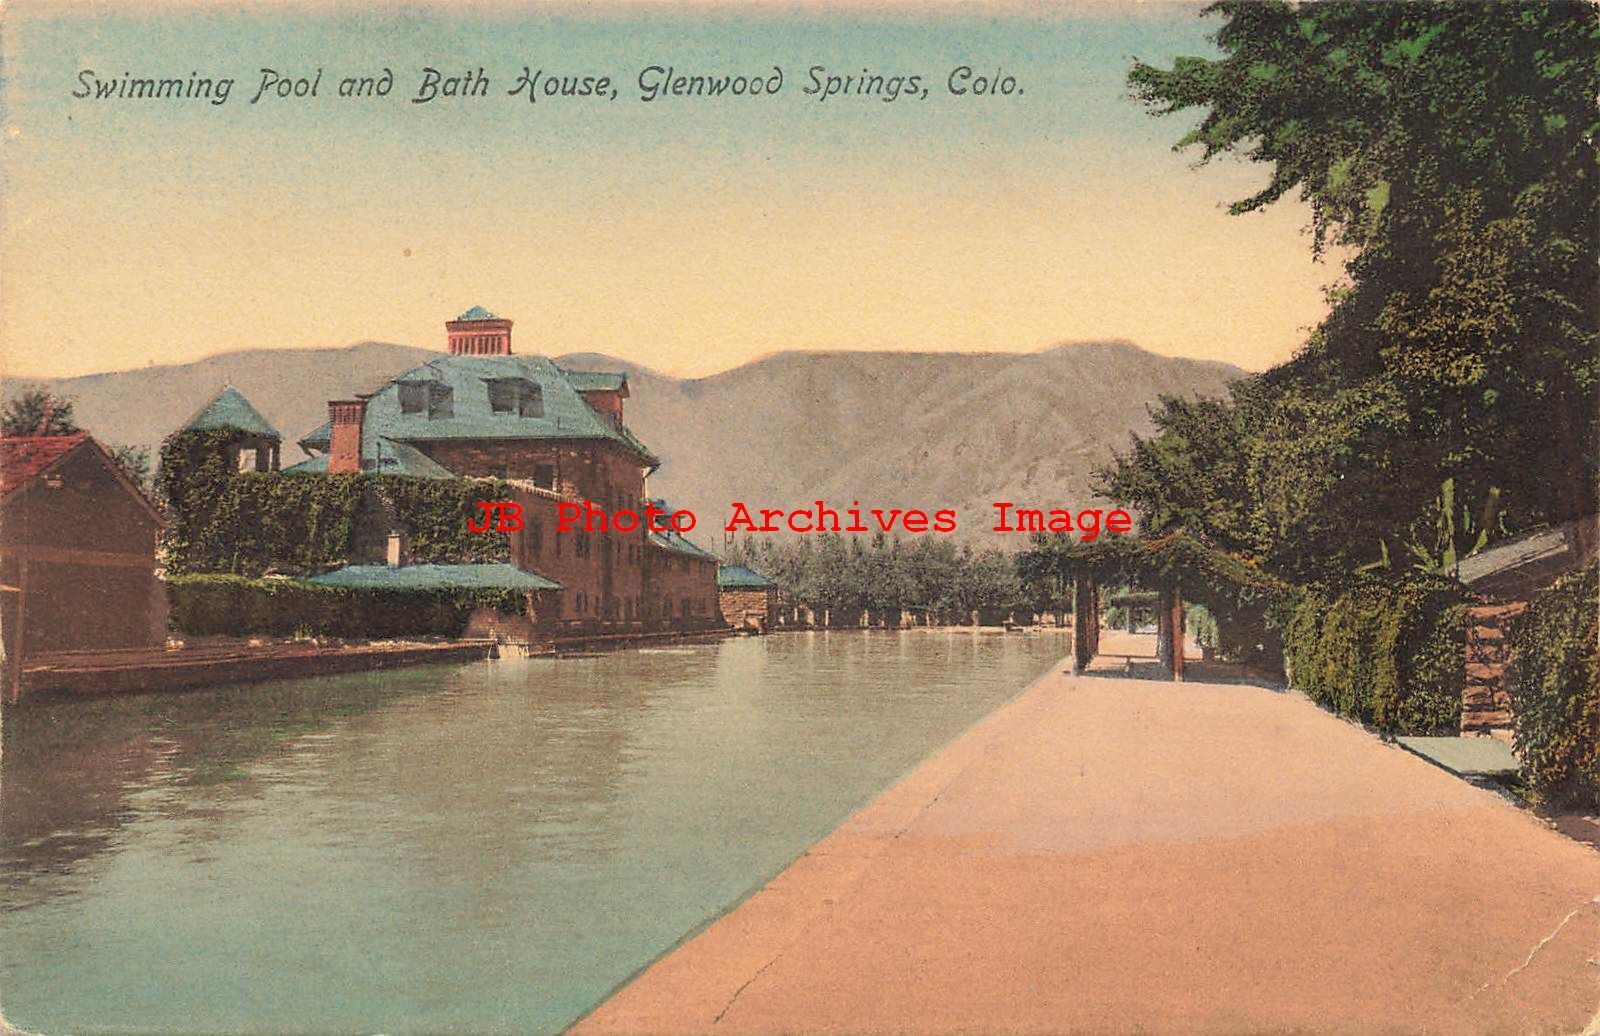 CO, Glenwood Springs, Colorado, Swimming Pool & Bath House, Ollie Thorson Pub